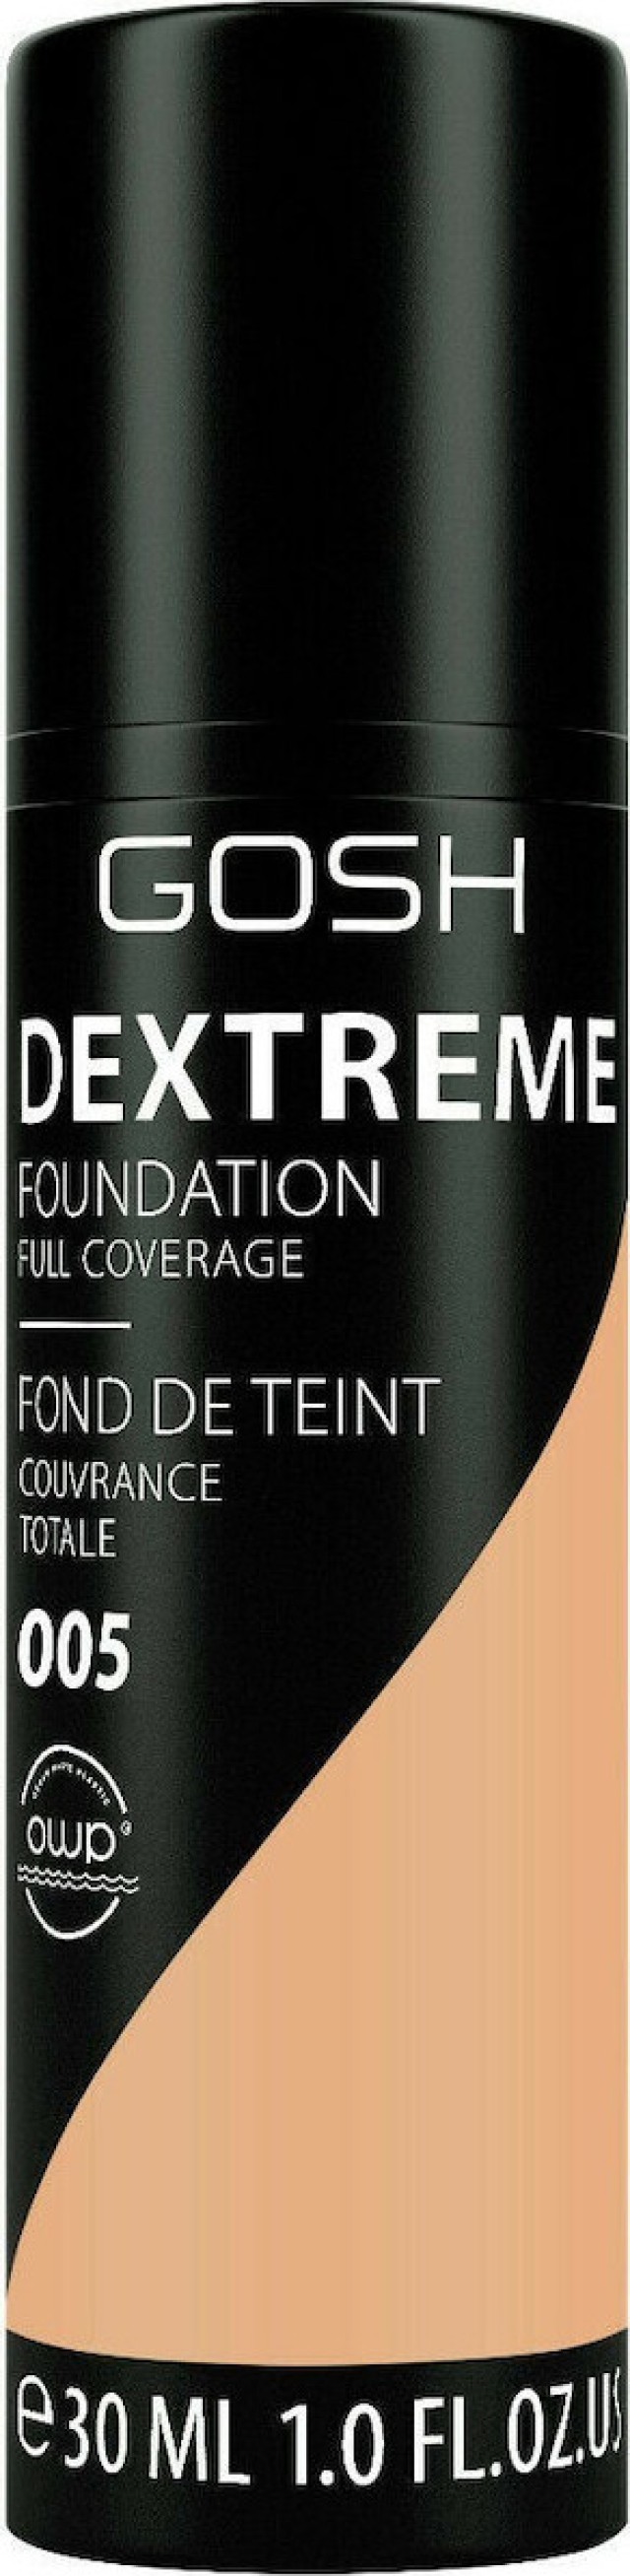 Gosh Dextreme Full Coverage Foundation 005 Beige Καλυπτική Βάση Μακιγιάζ με Ματ Αποτέλεσμα 30ml